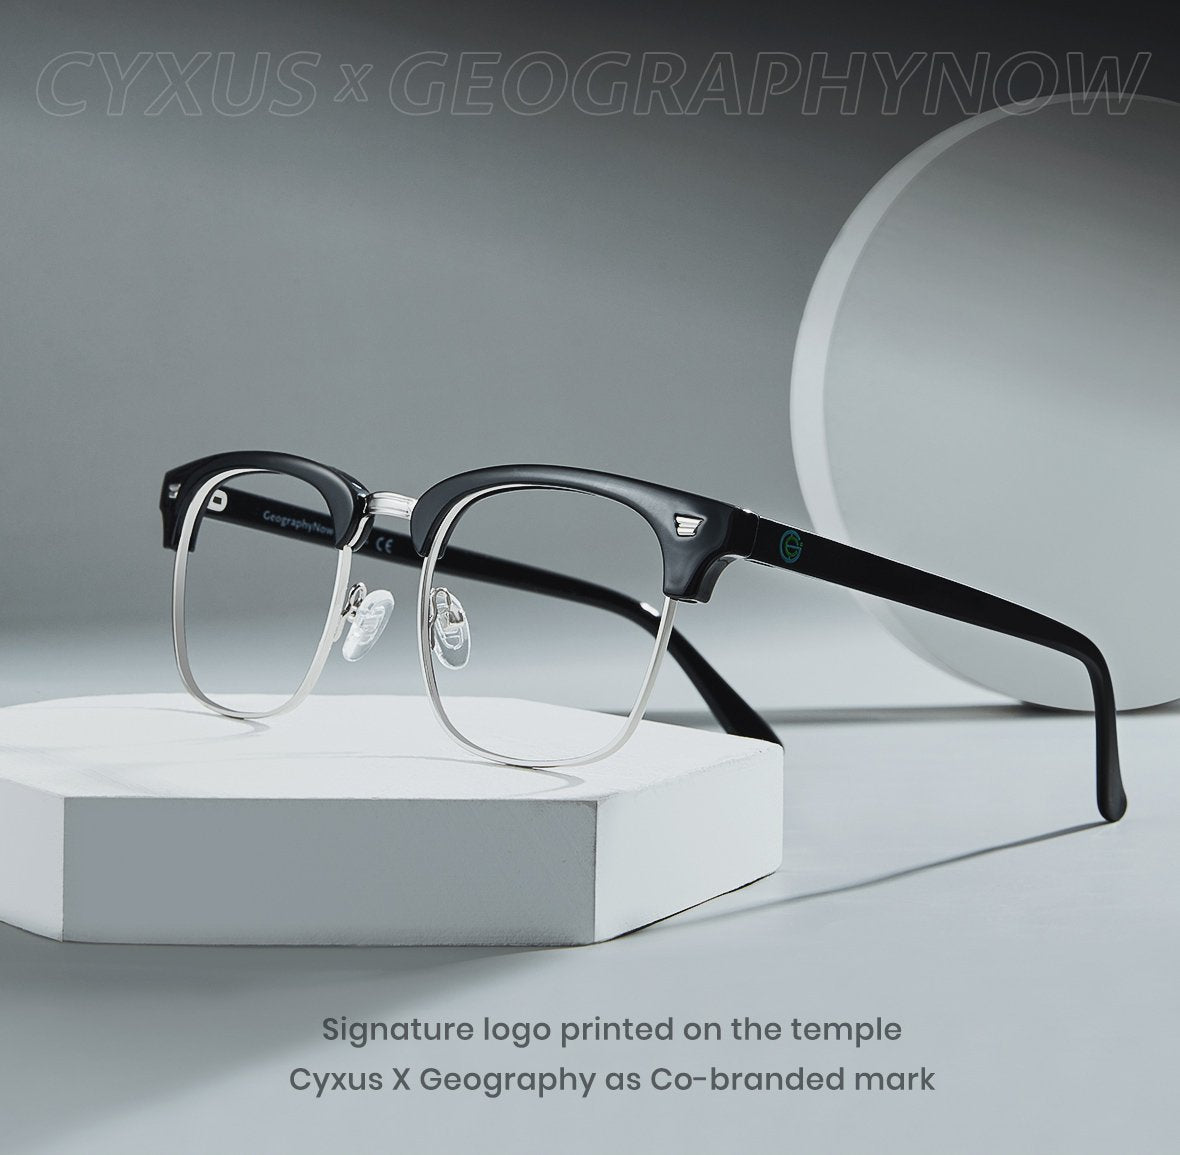 Blue Light Glasses for Computer Anti Glare Half Frame Clubmaster